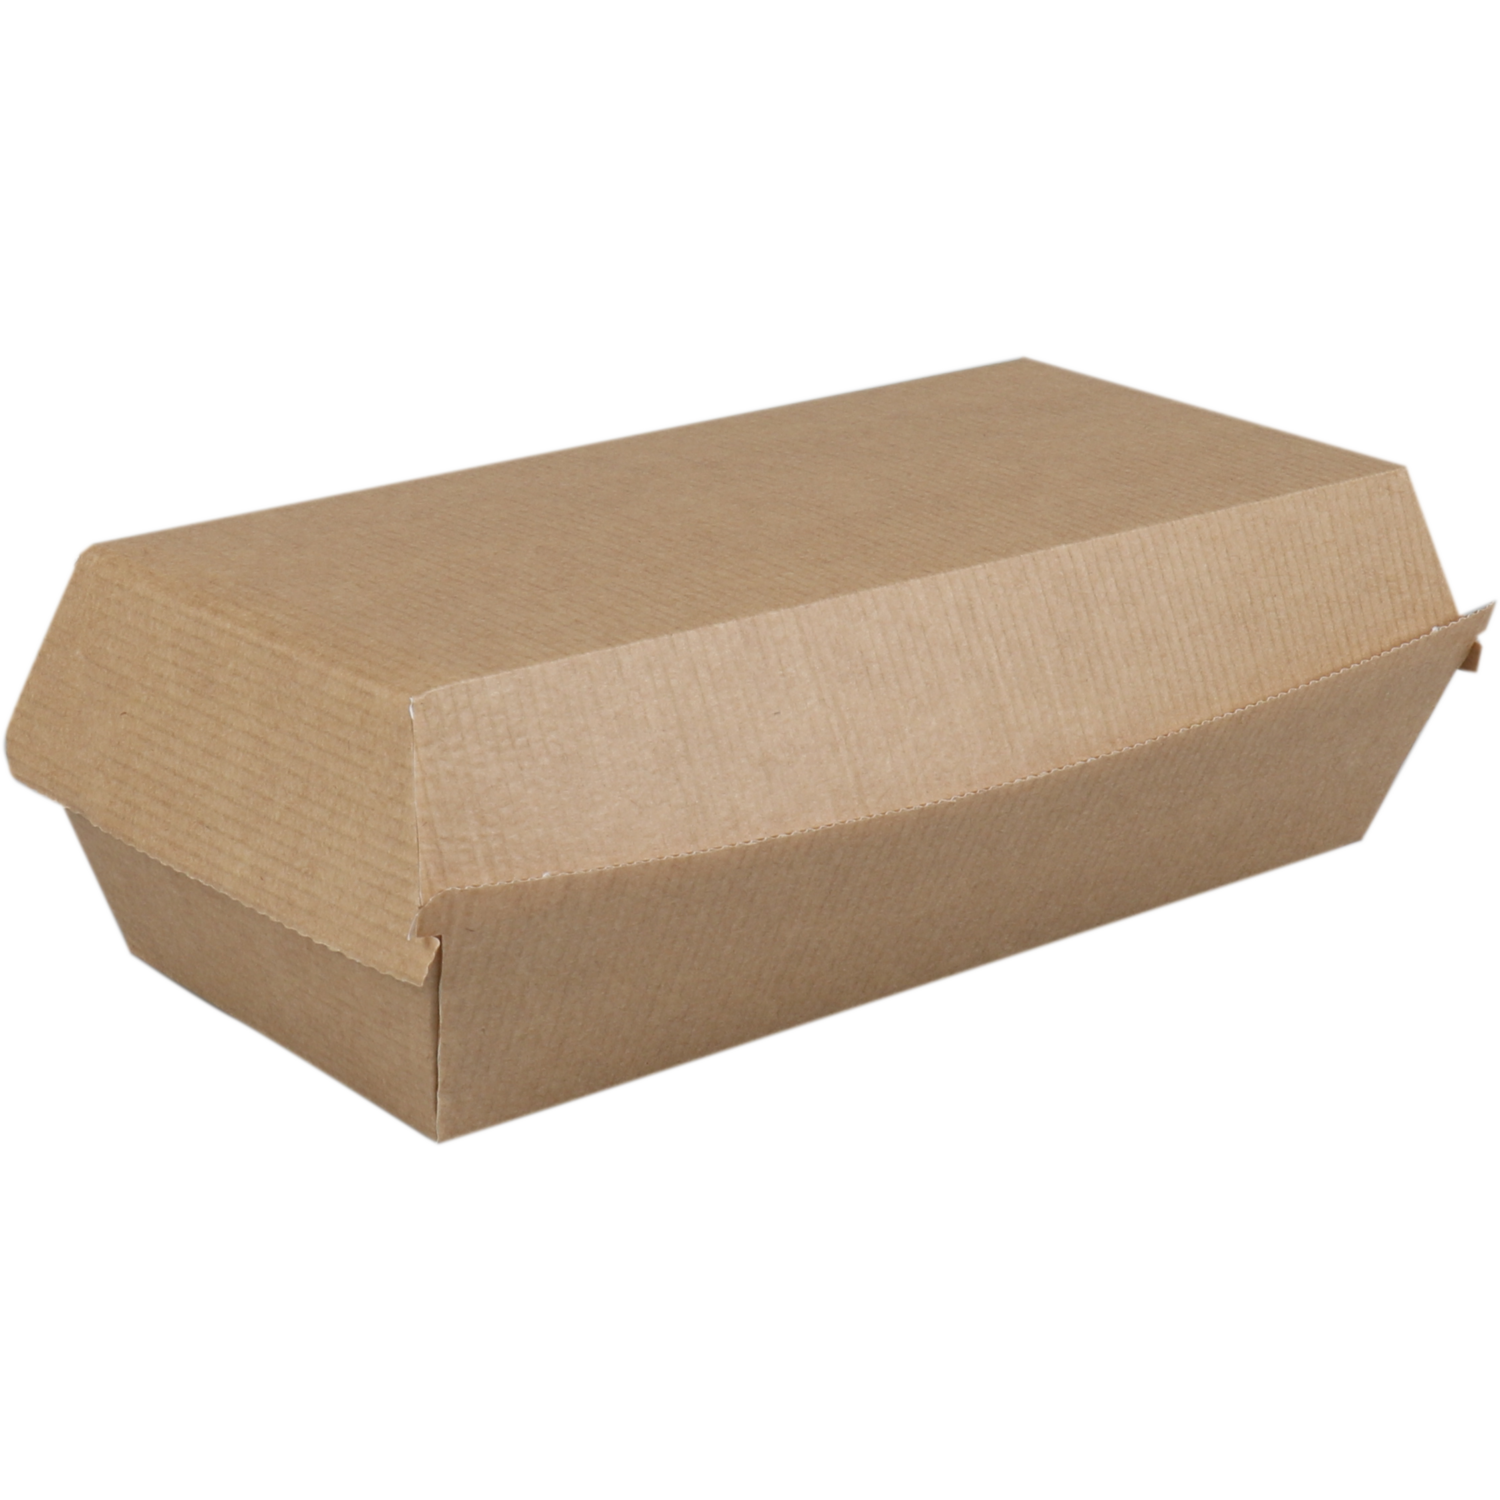 Biodore® Bak, Papier, sandwichbox, 185x85x38mm, bruin 1